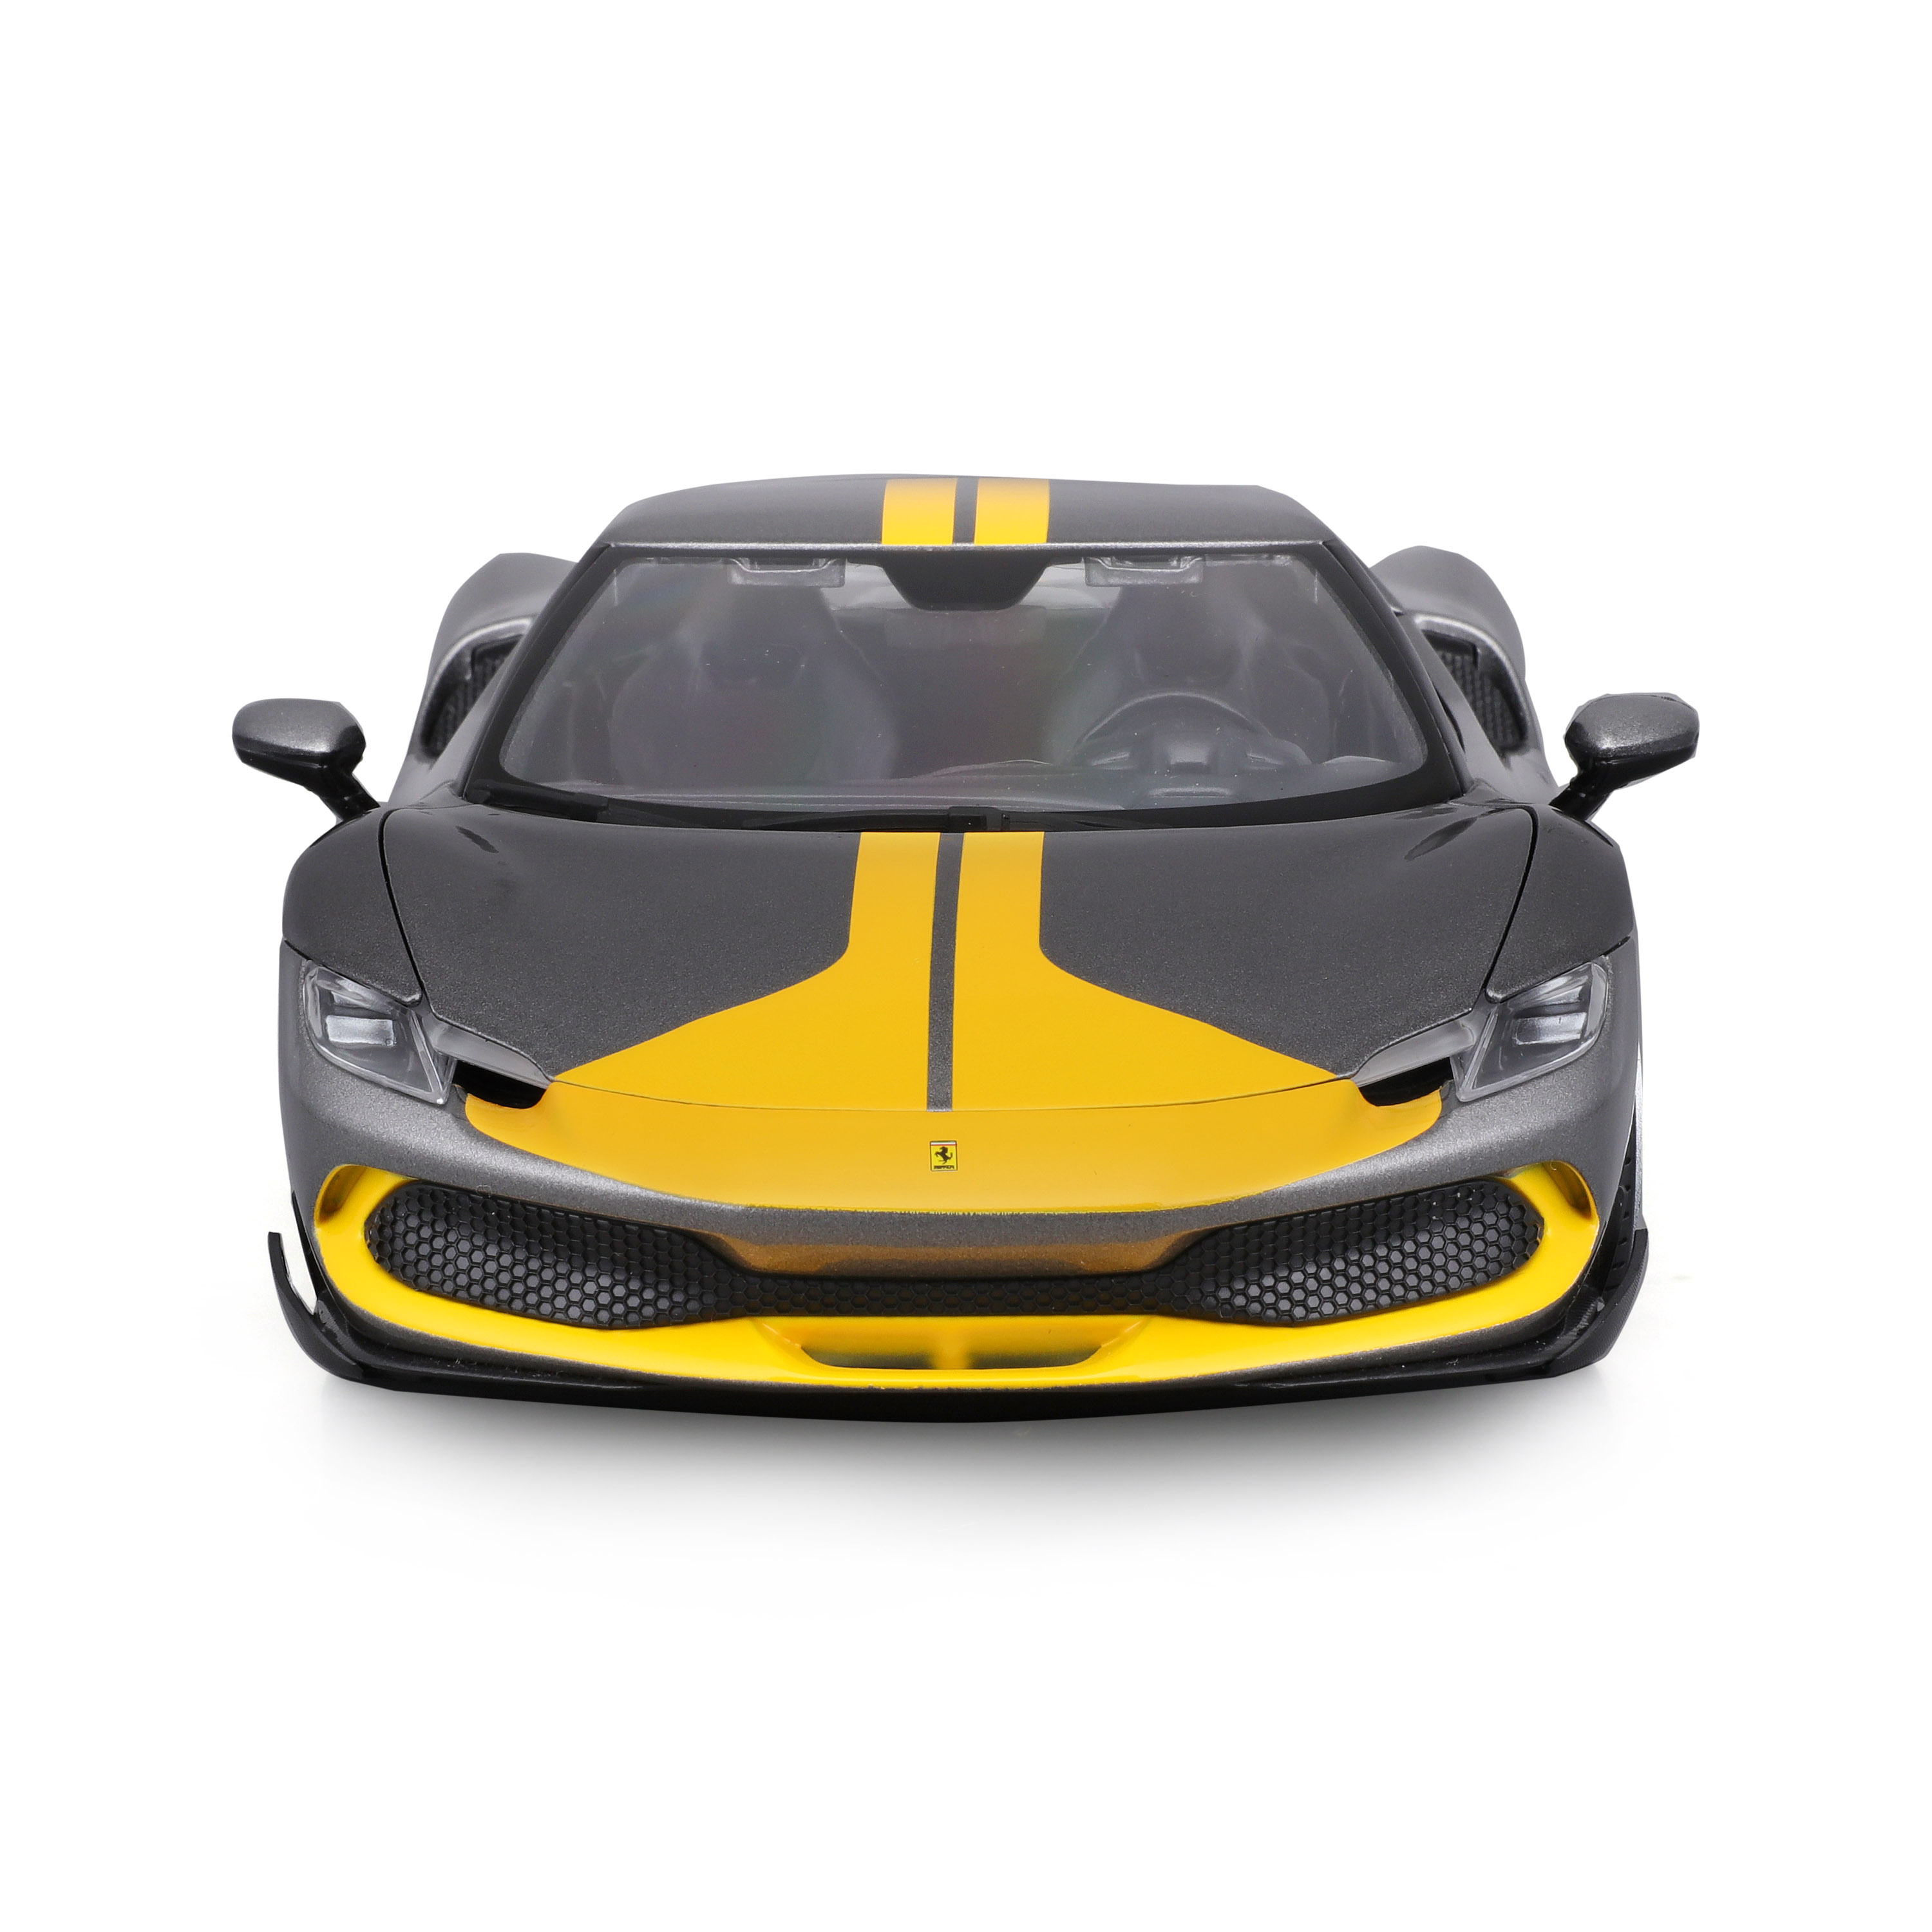 BBURAGO Ferrari 296GTB Assetto Fiorano Spielzeugauto 1:18) (grau/gelb, Maßstab